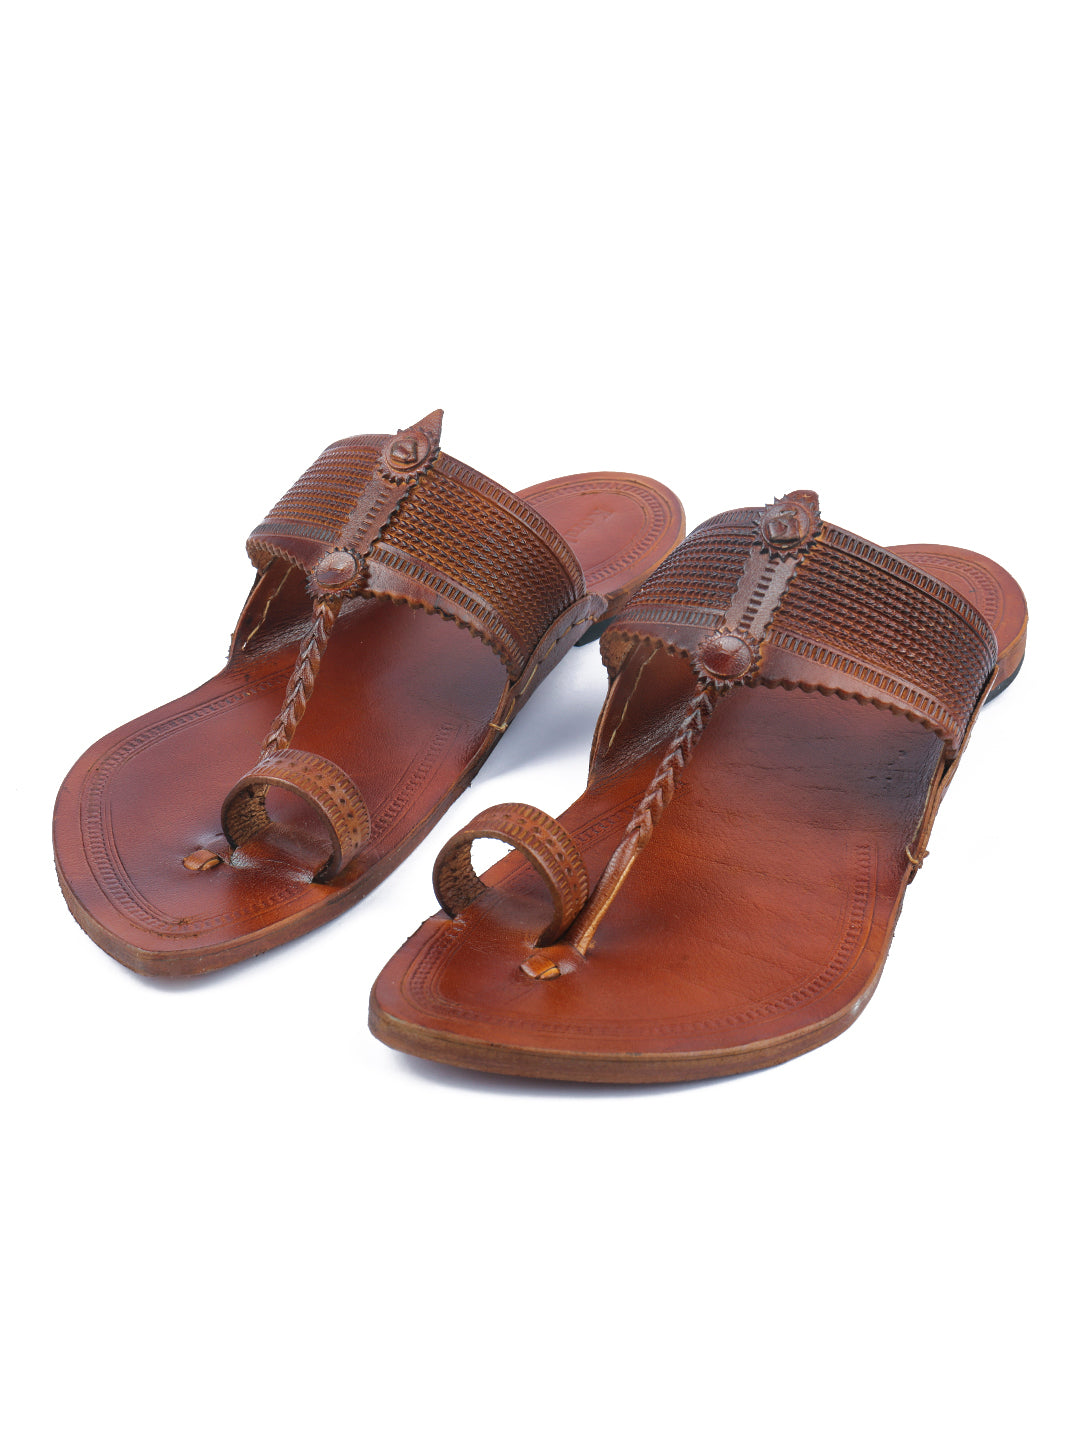 Arabic Slippers Traditional Men's Sandals (10 UK, Tan, 43) price in UAE |  Amazon UAE | kanbkam